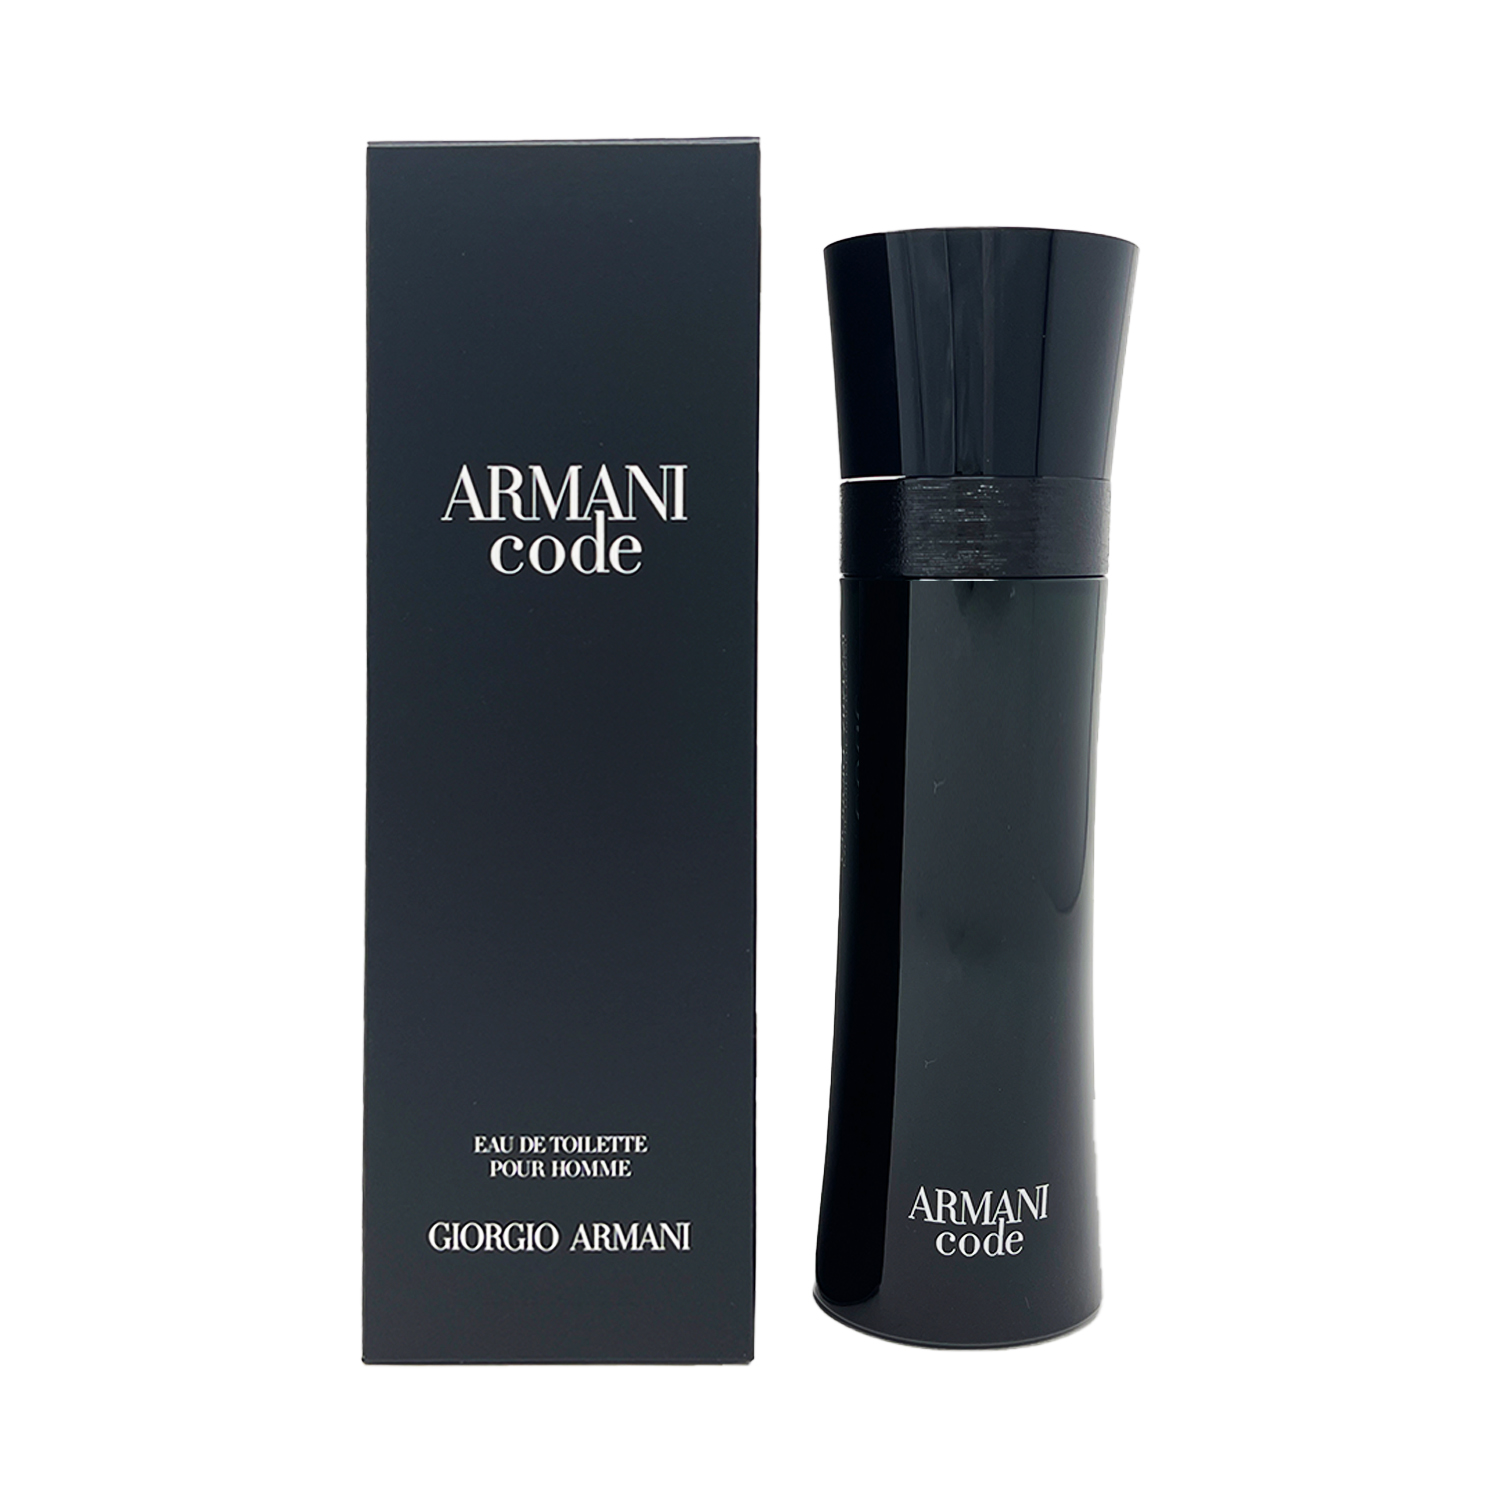 Giorgio Armani Code Eau de Toilette, Perfume for Women, 4.2 Oz Full Size - image 2 of 4